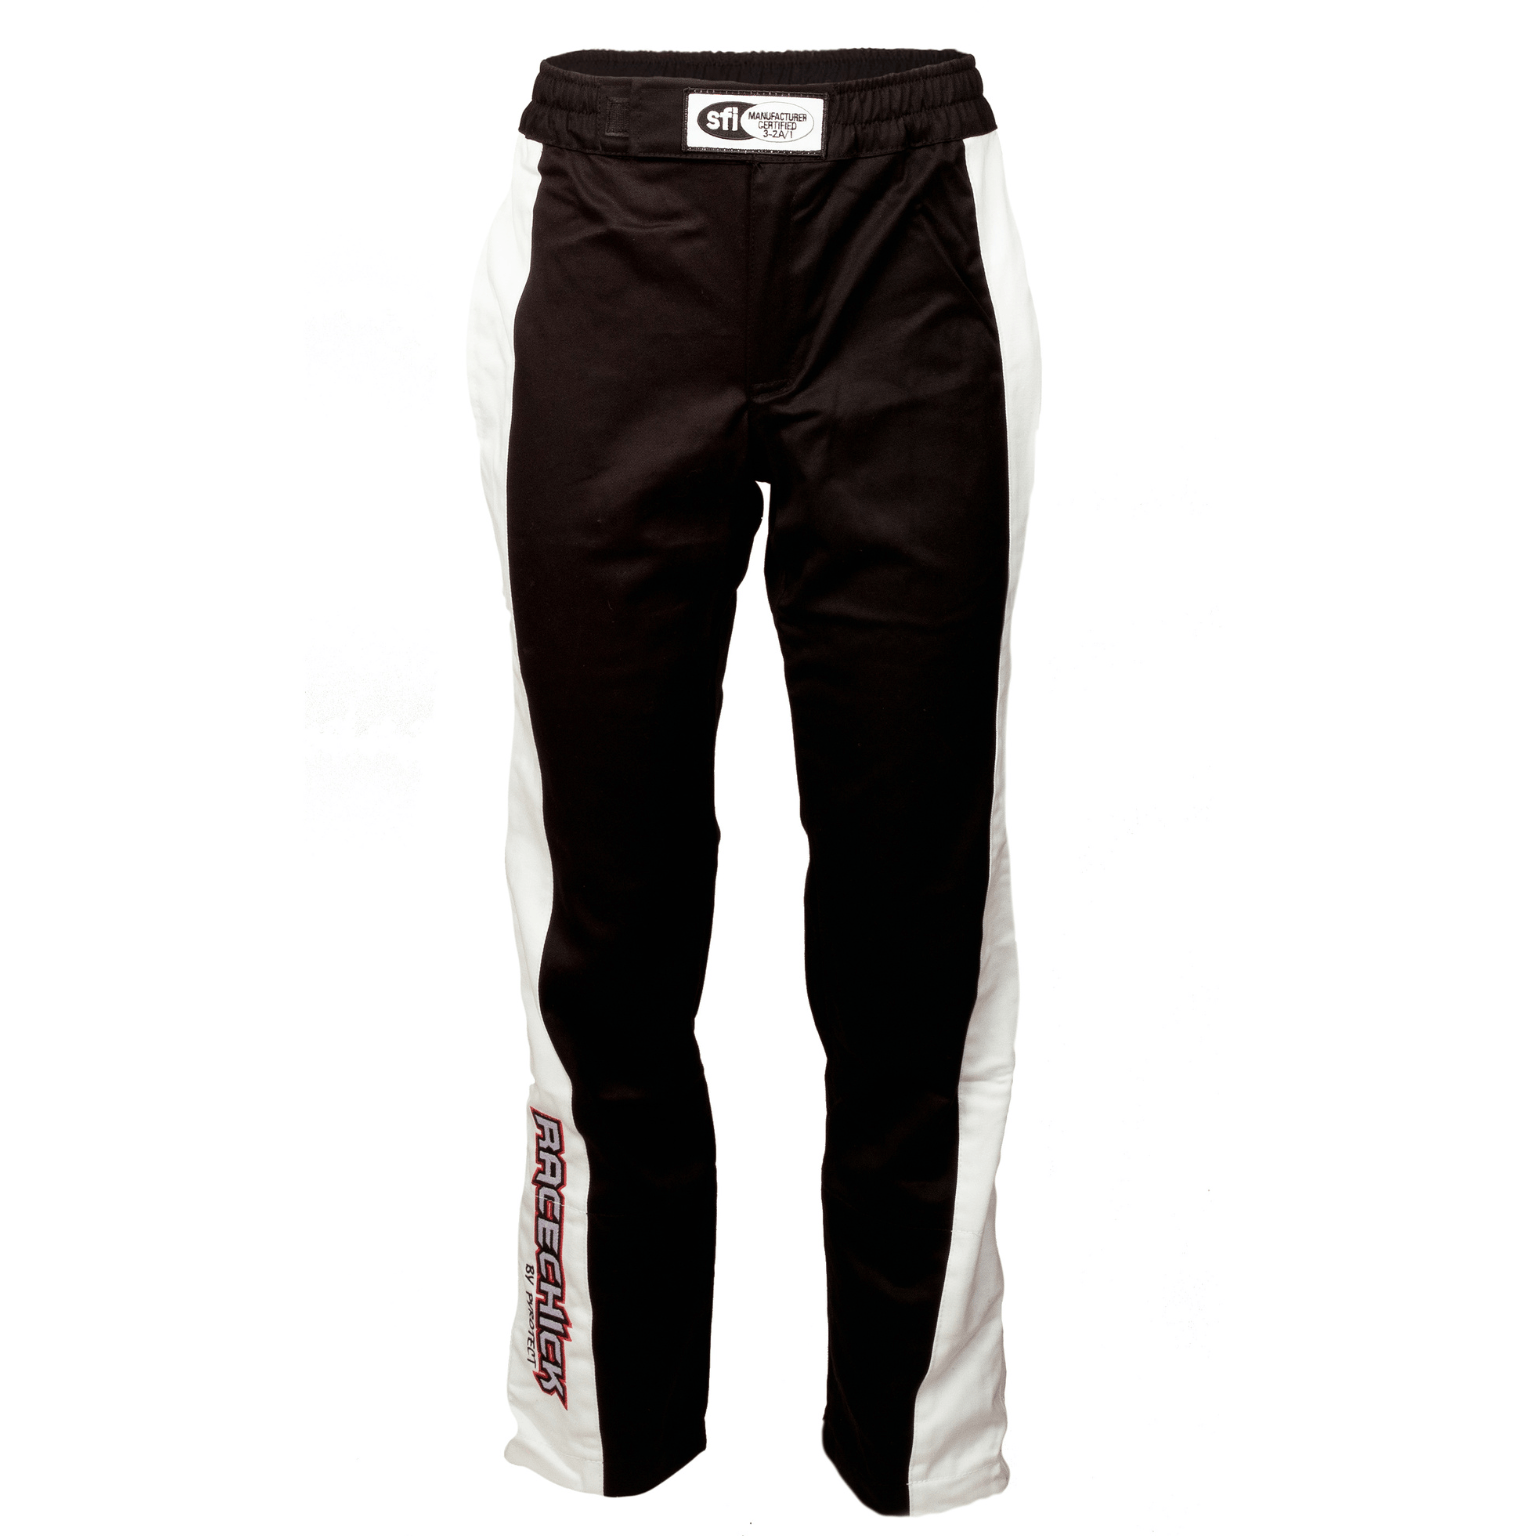 Racechick 'FIERCE' SFI 3.2A/1 Women's Racing Pants (Black/White)